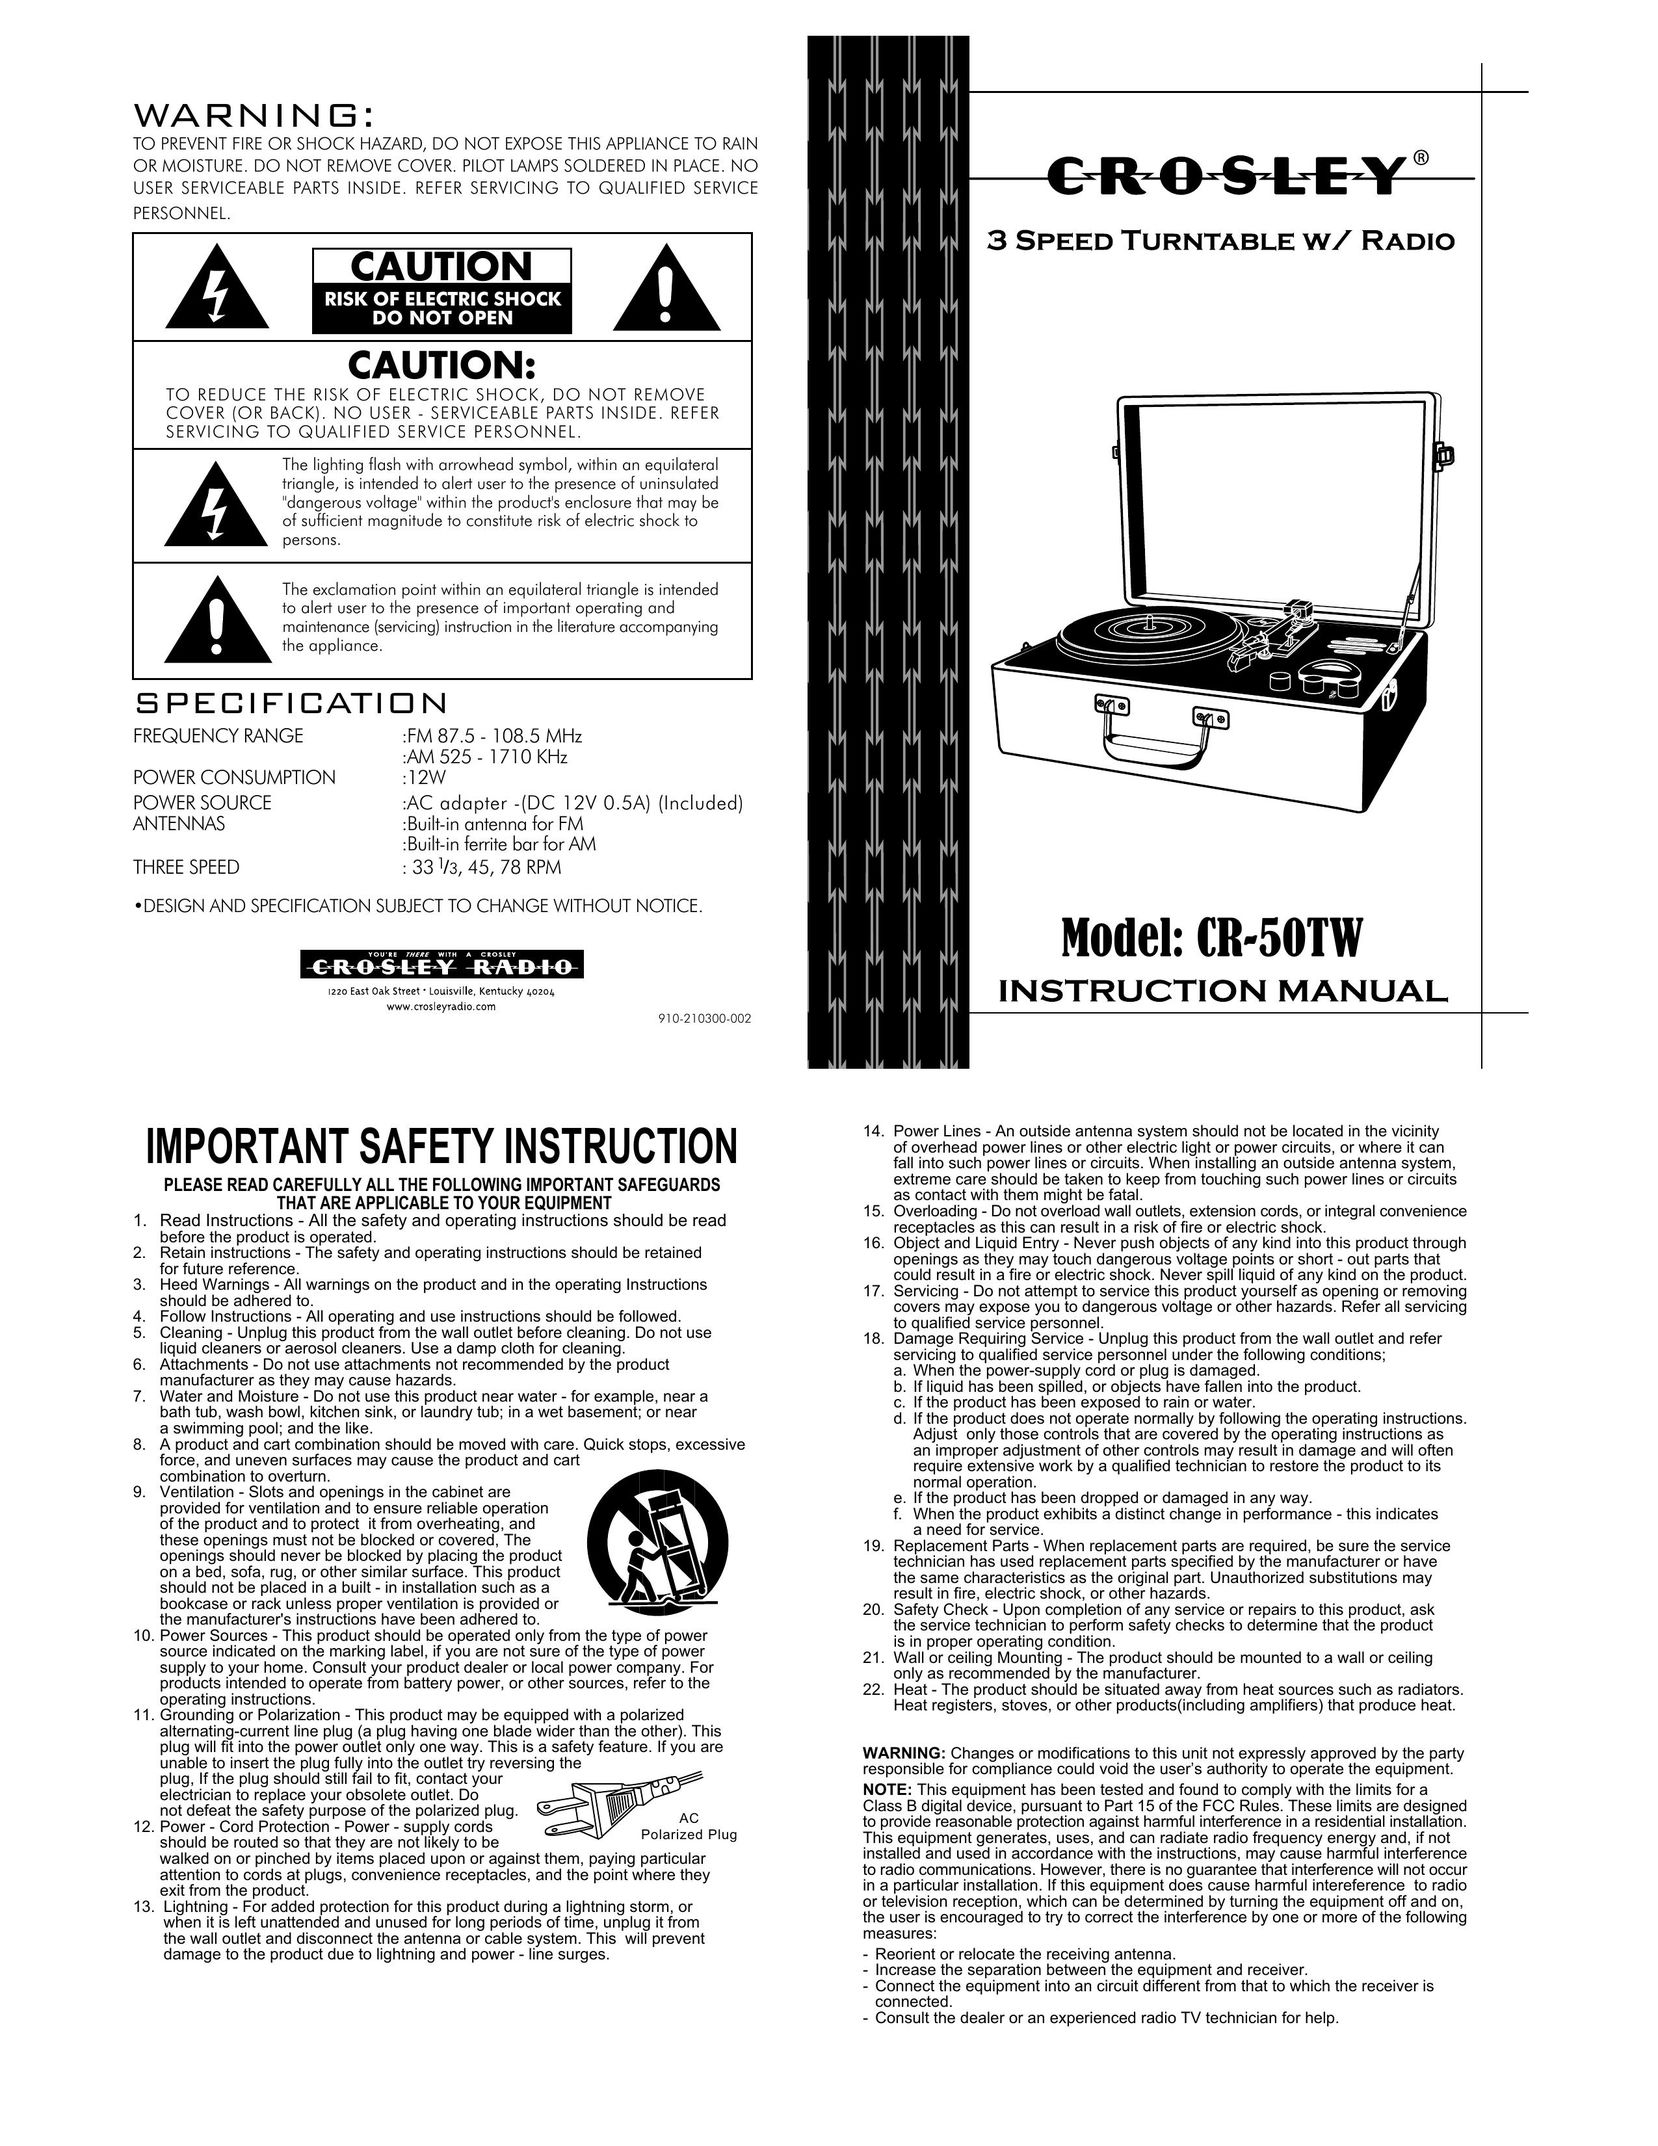 Crosley Radio CR-50TW Turntable User Manual